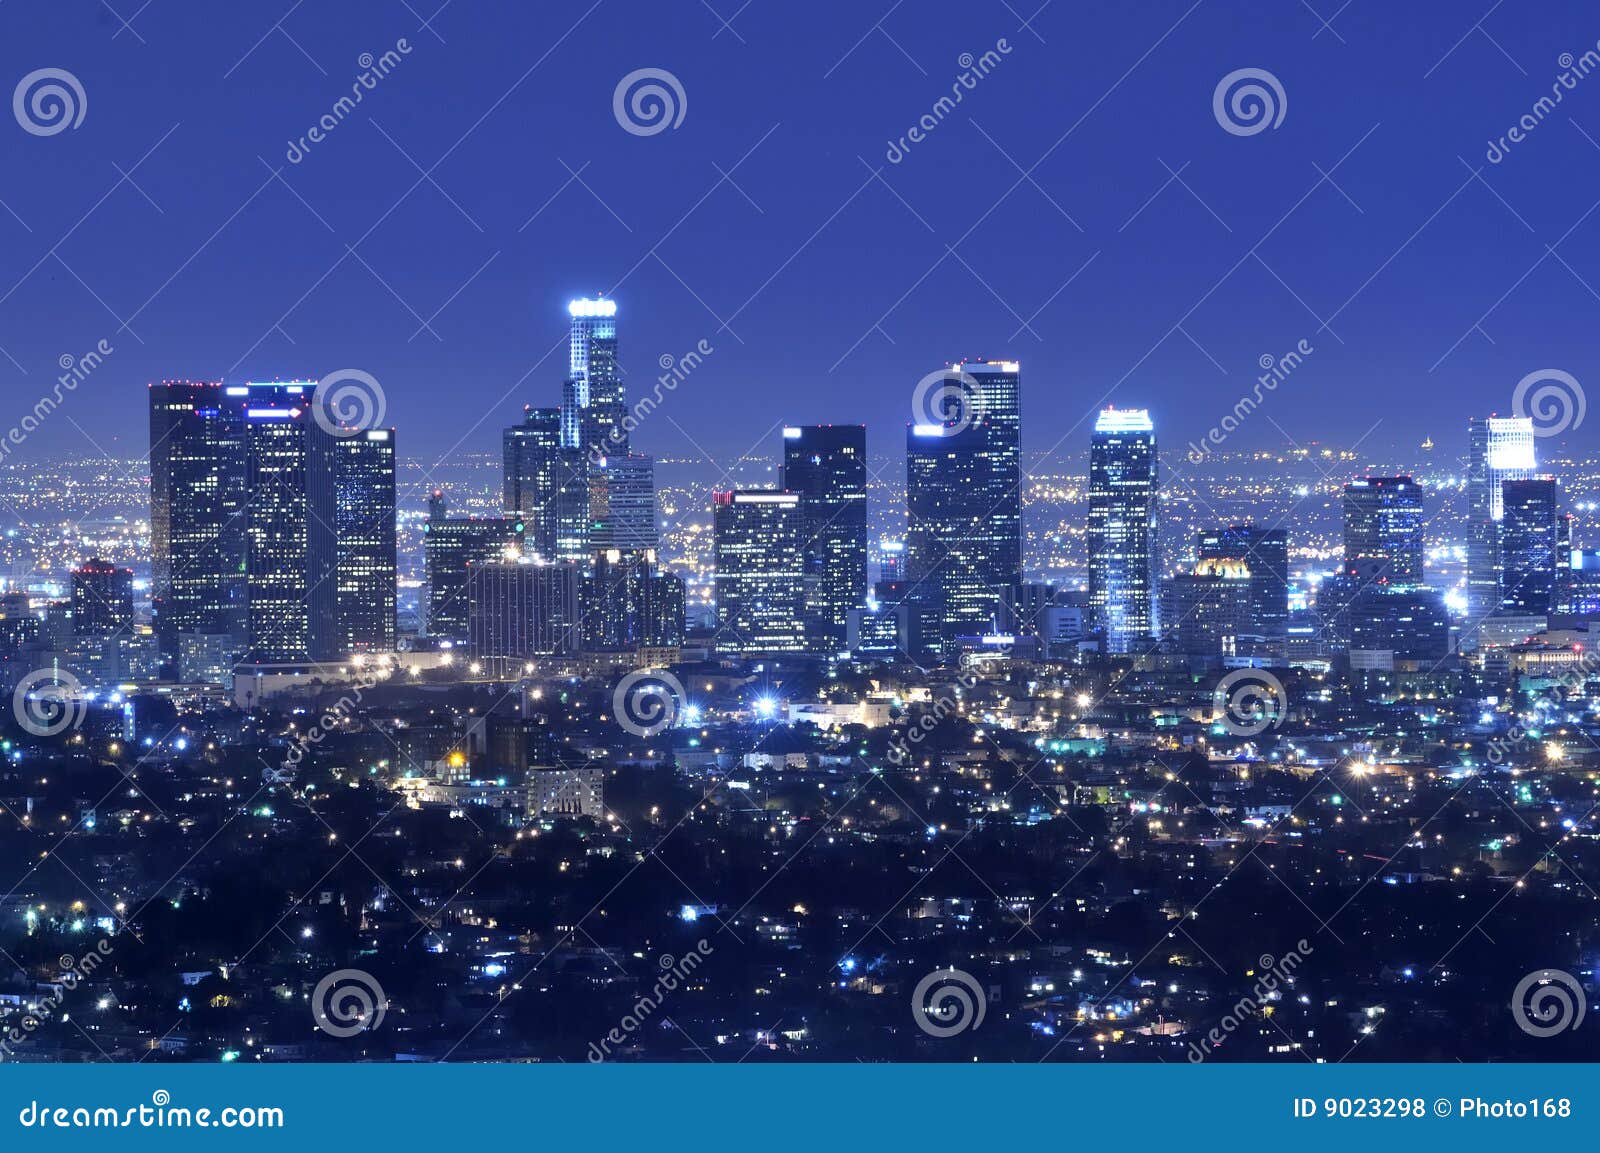 los angeles city skyline at night